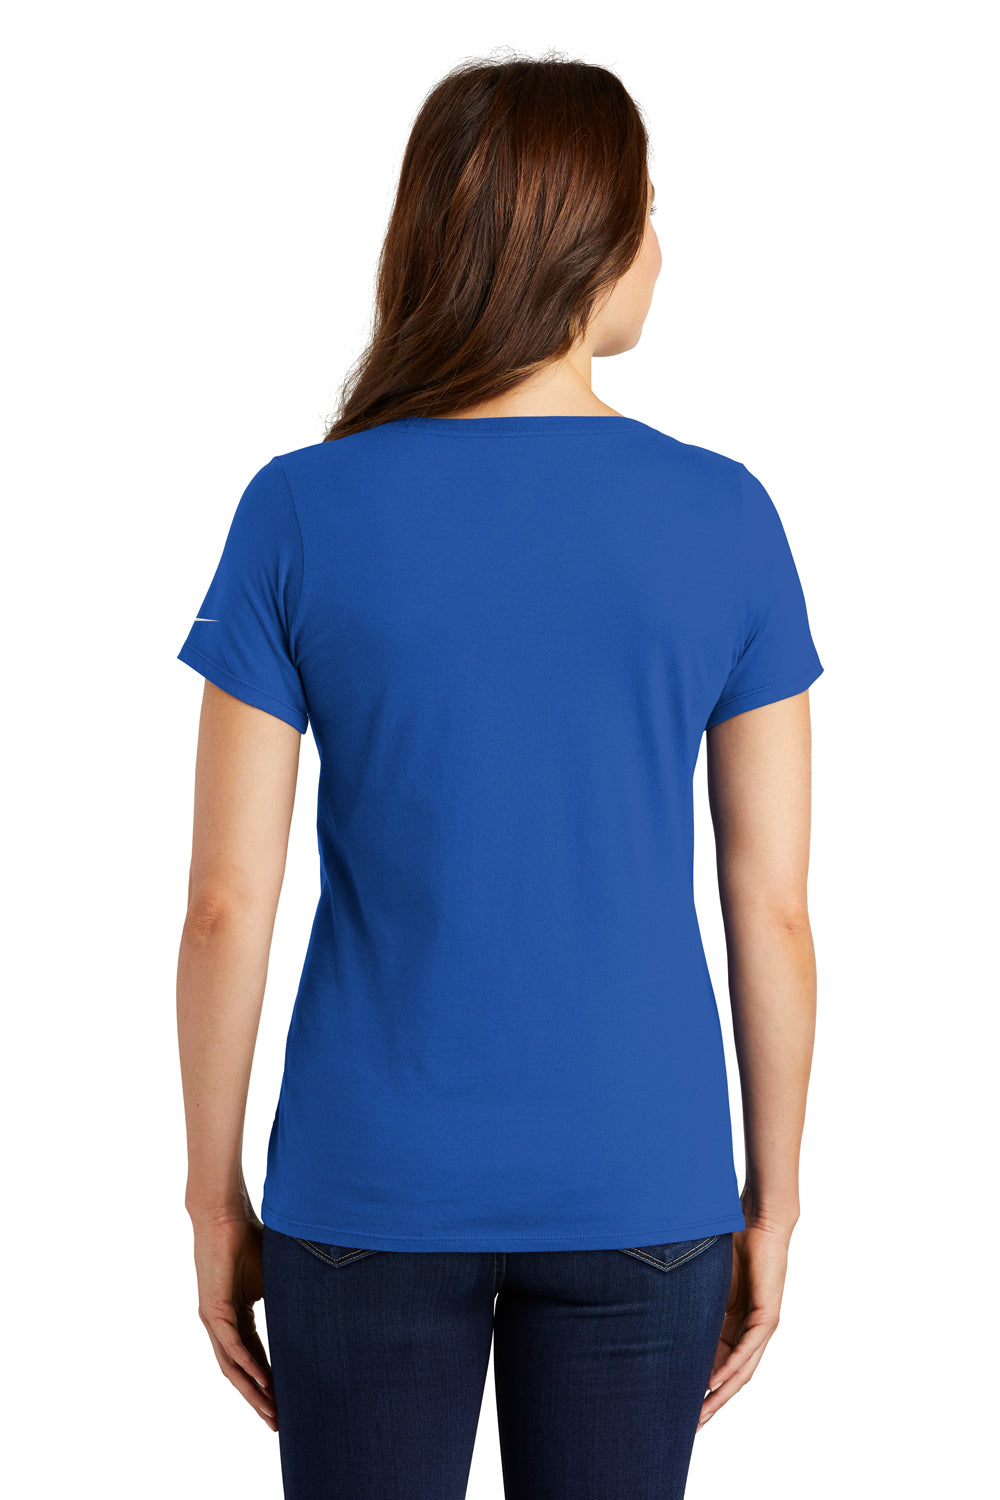 Nike NKBQ5236 Womens Core Short Sleeve Scoop Neck T-Shirt Rush Blue Back